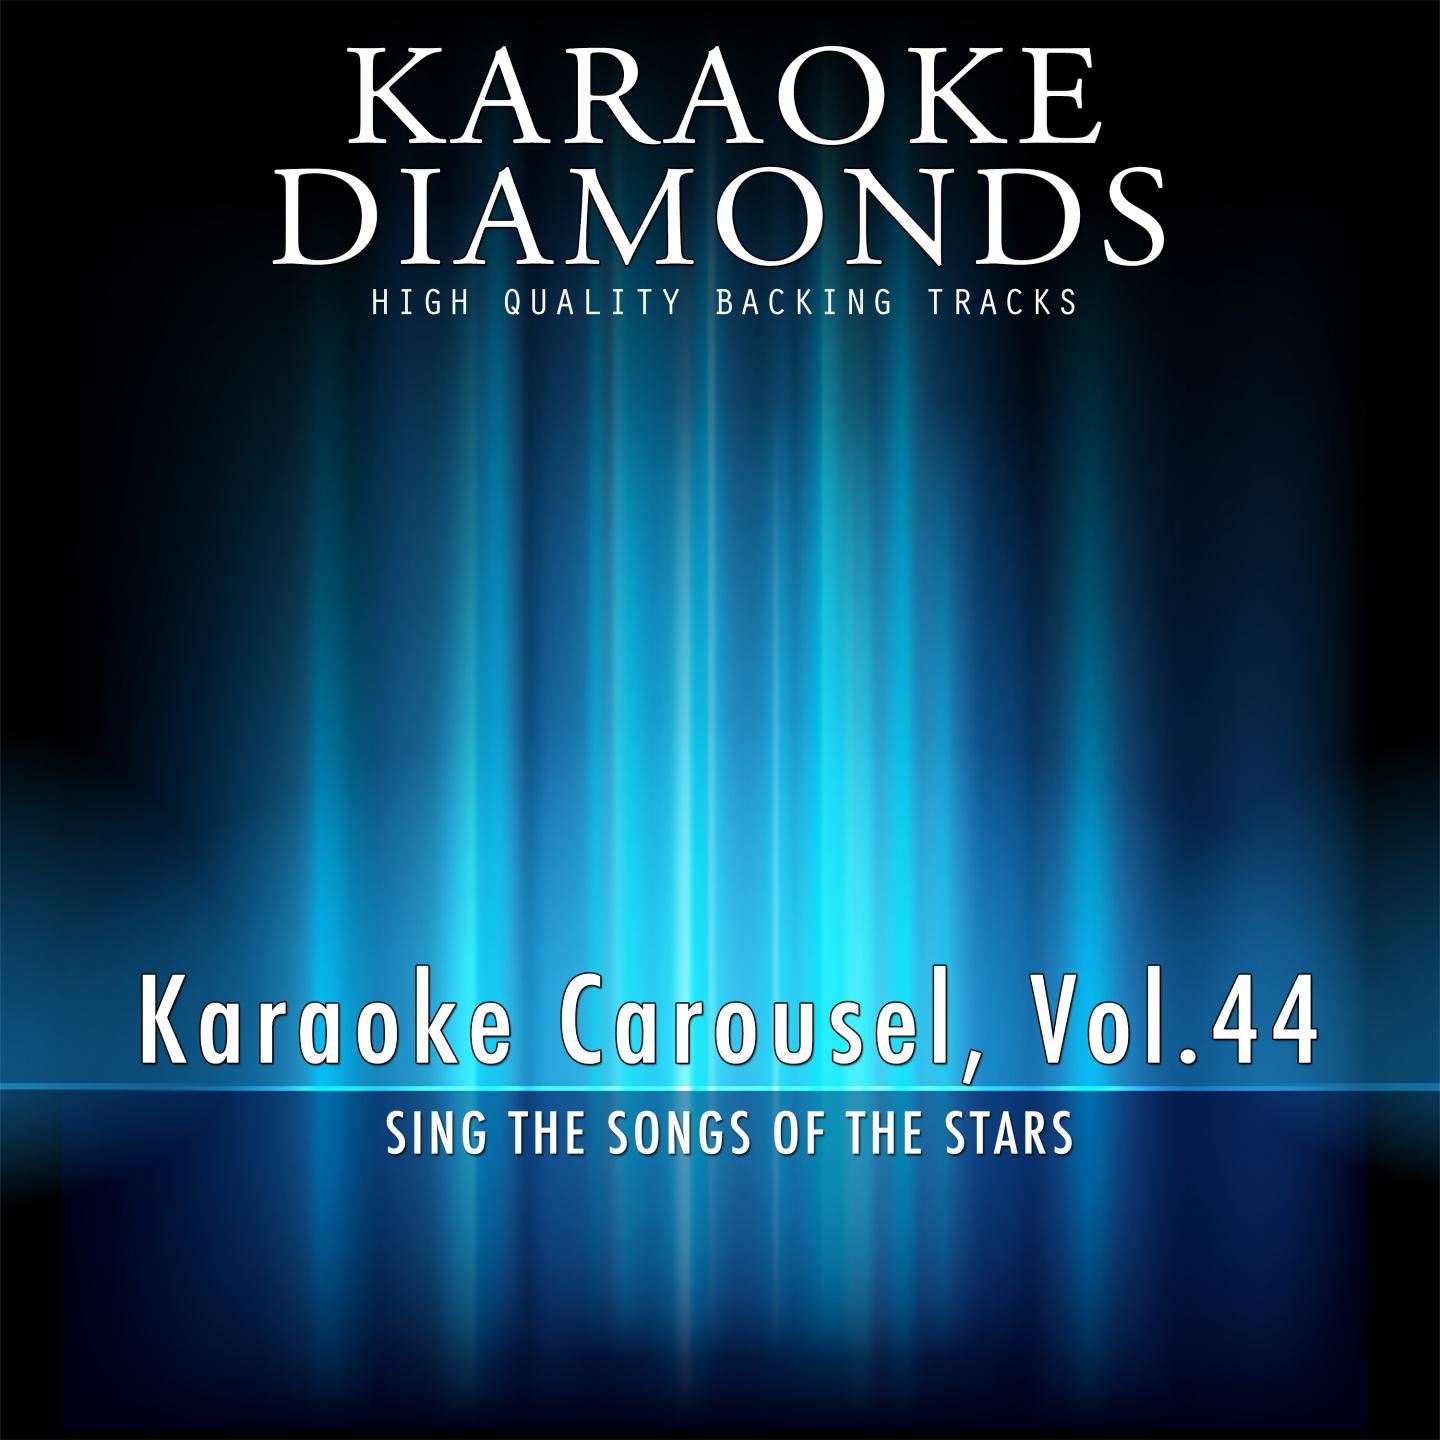 Joe Brooks - You Light Up My Life (Karaoke Version) [Originally Performed by LeAnn Rimes]